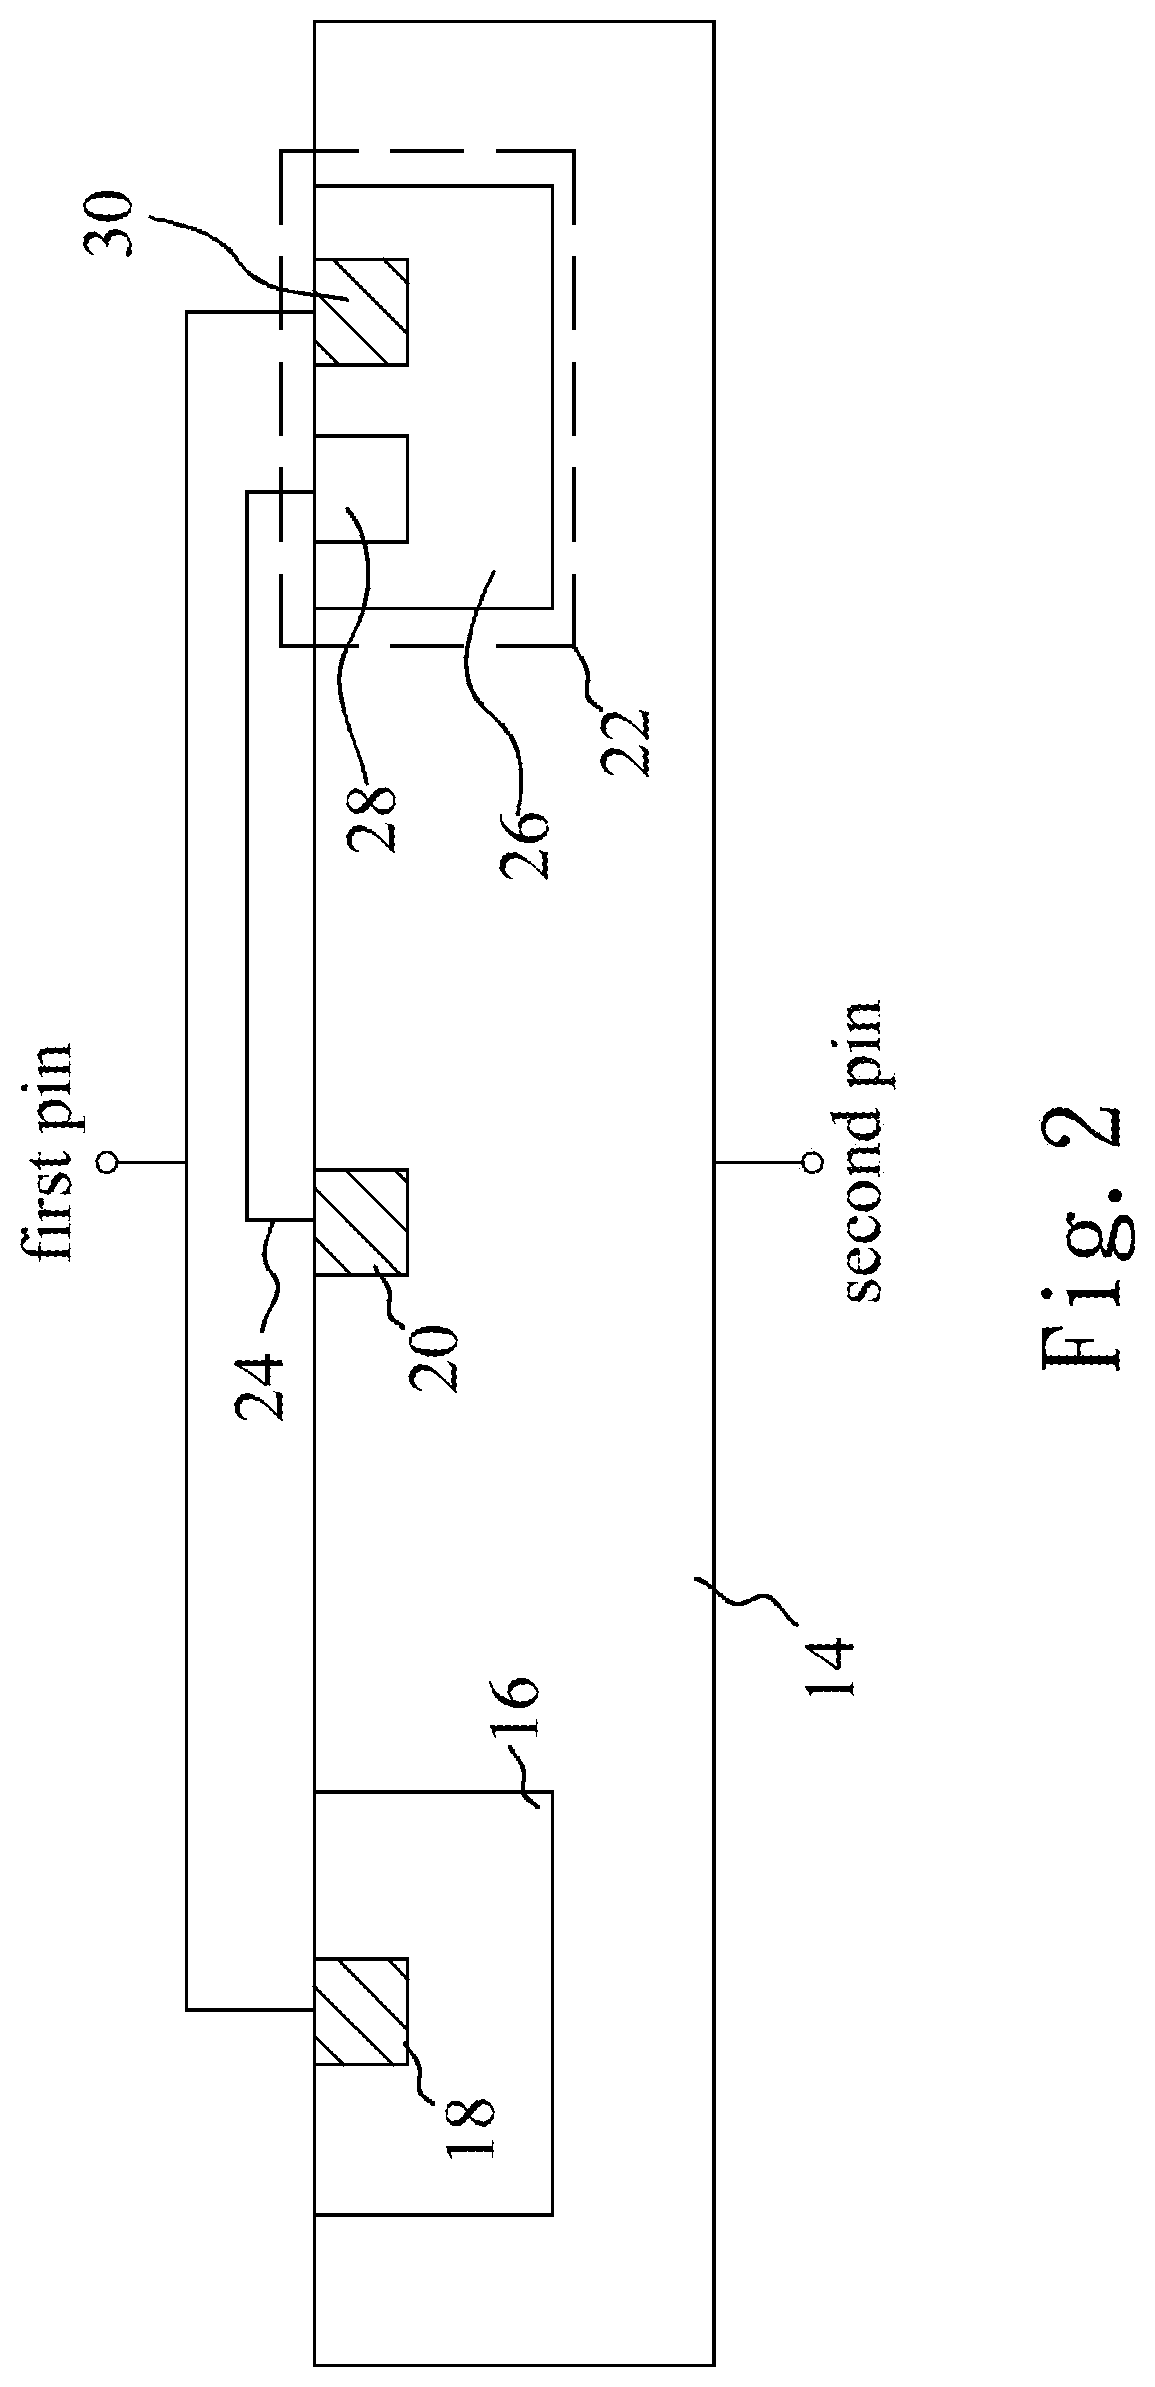 Vertical transient voltage suppression device